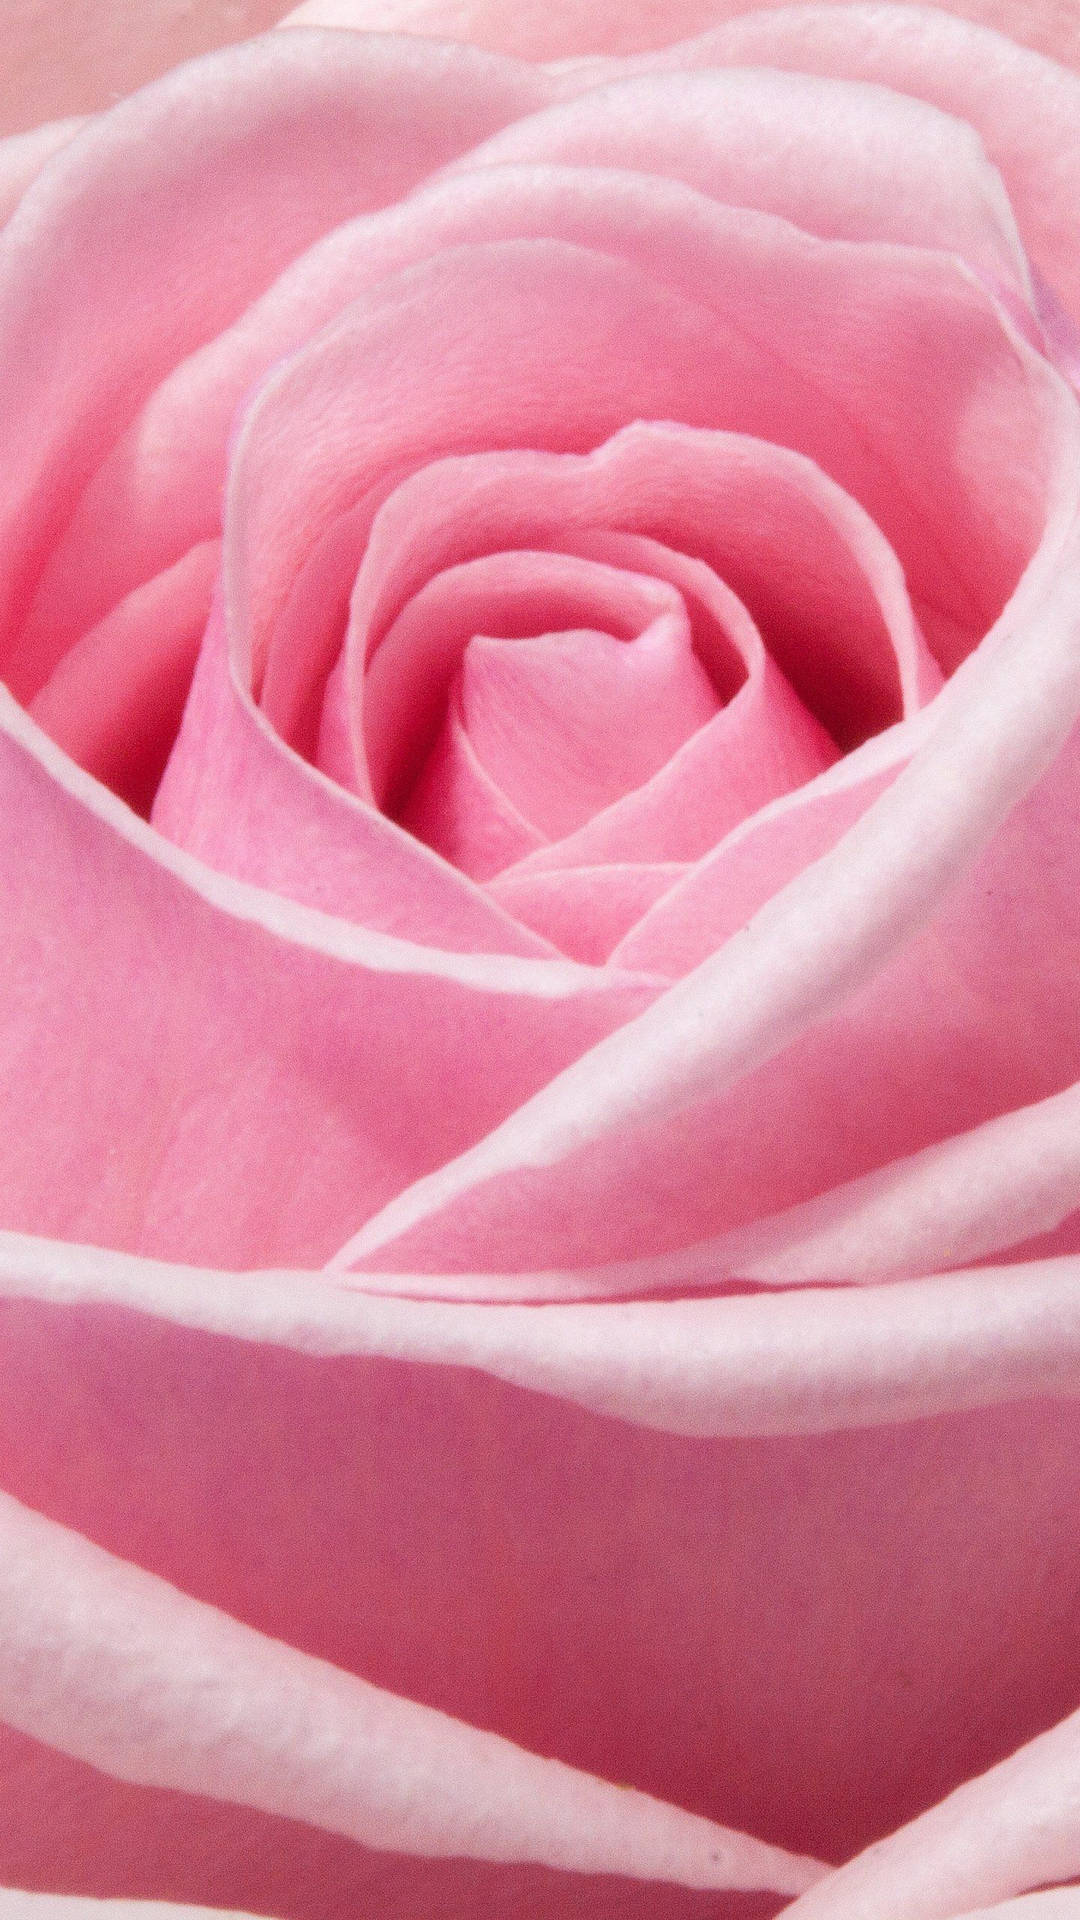 Pink Rose iPhone Close-Up Portrait Wallpaper